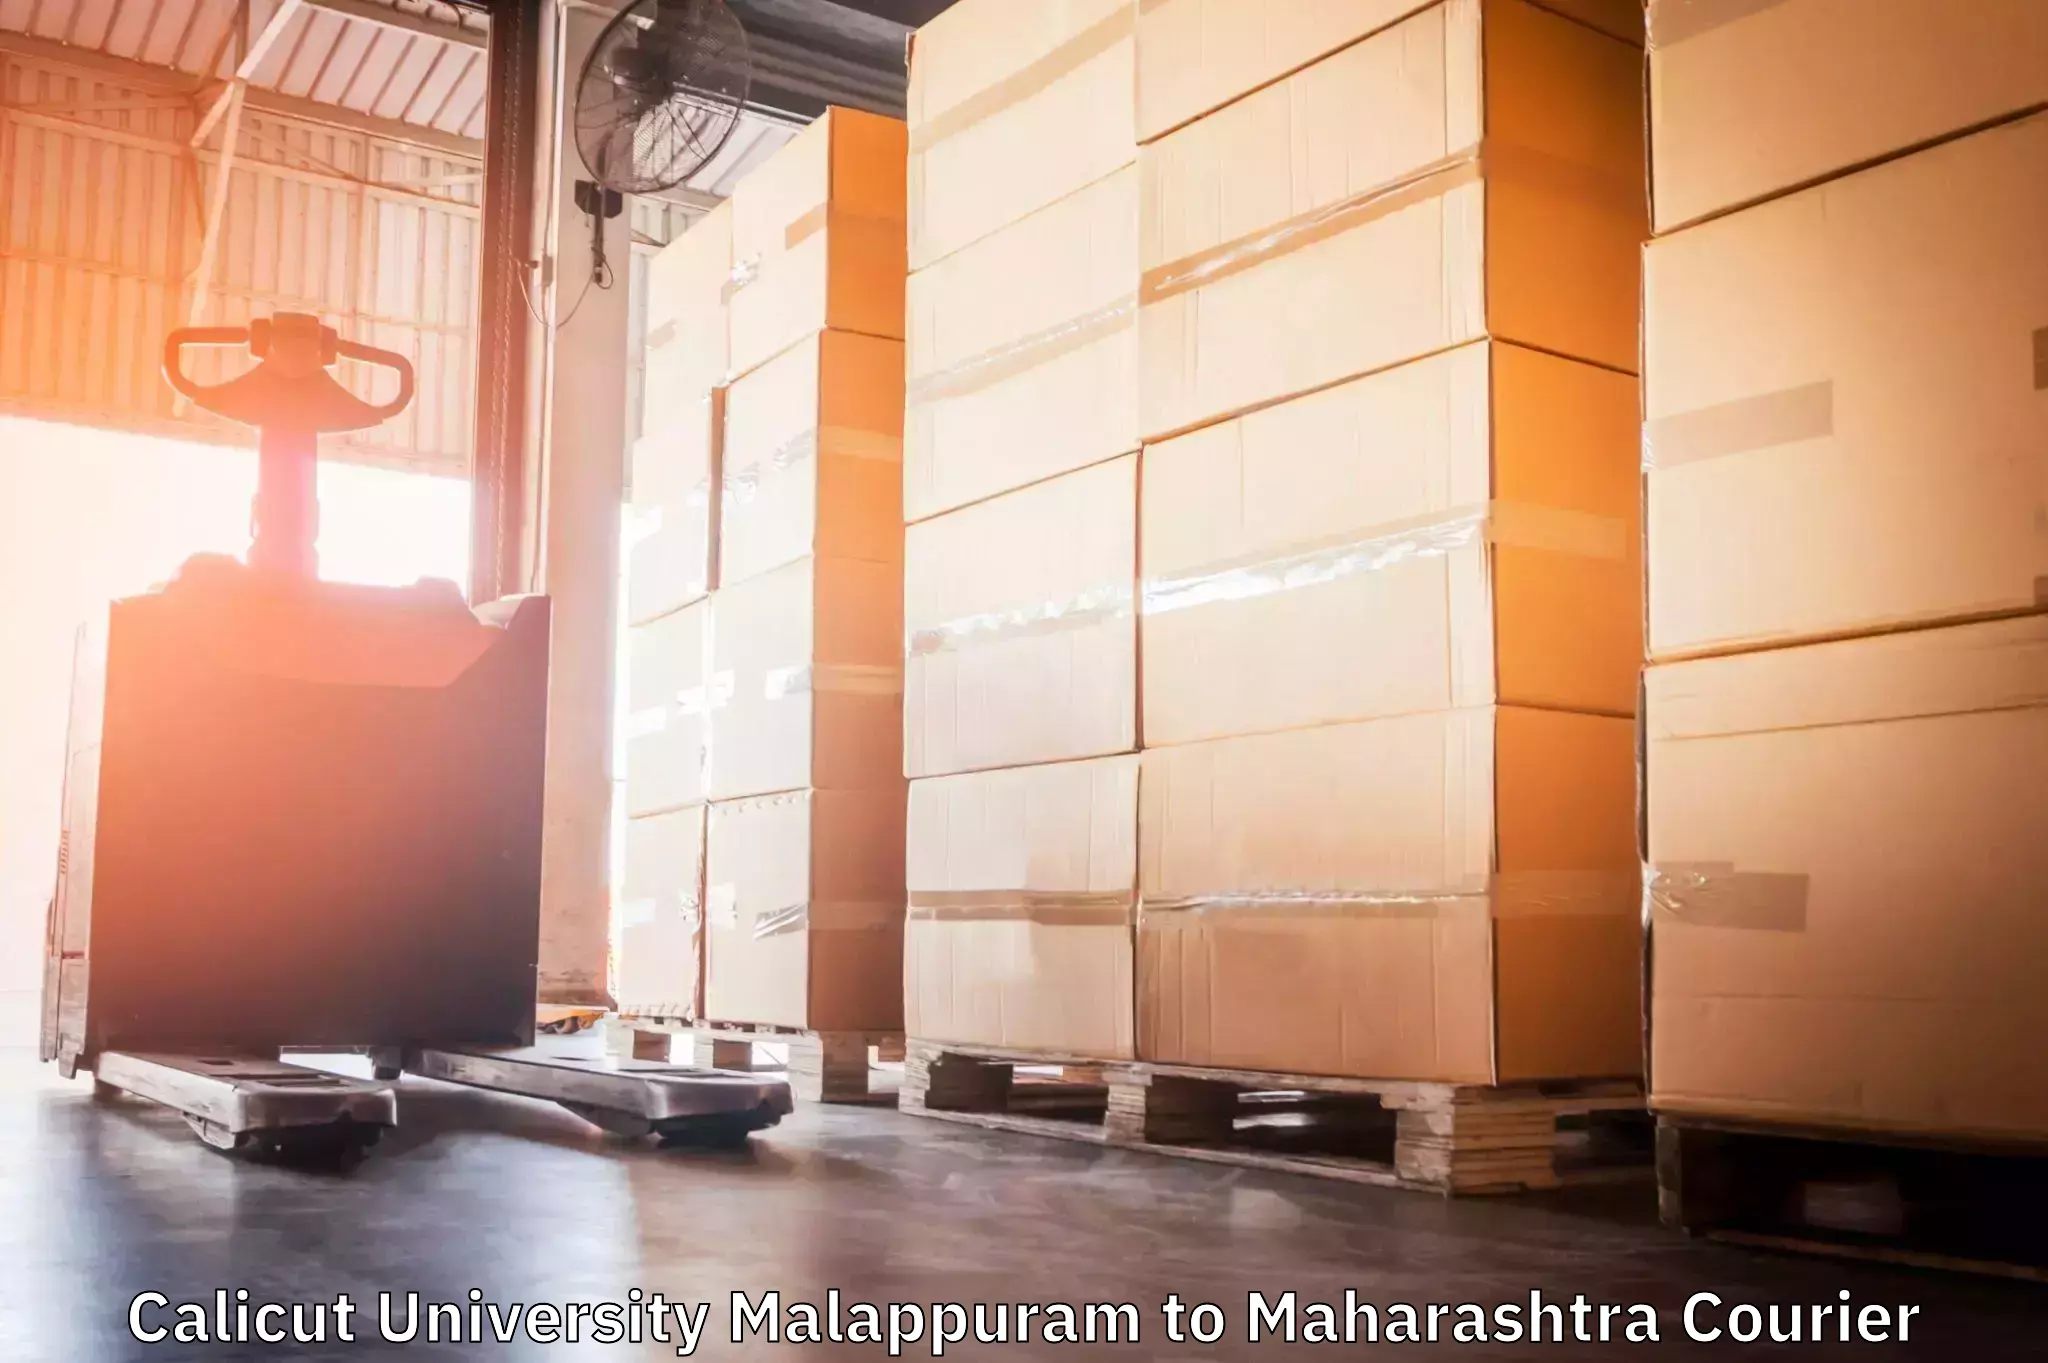 Customer-centric shipping Calicut University Malappuram to Oras